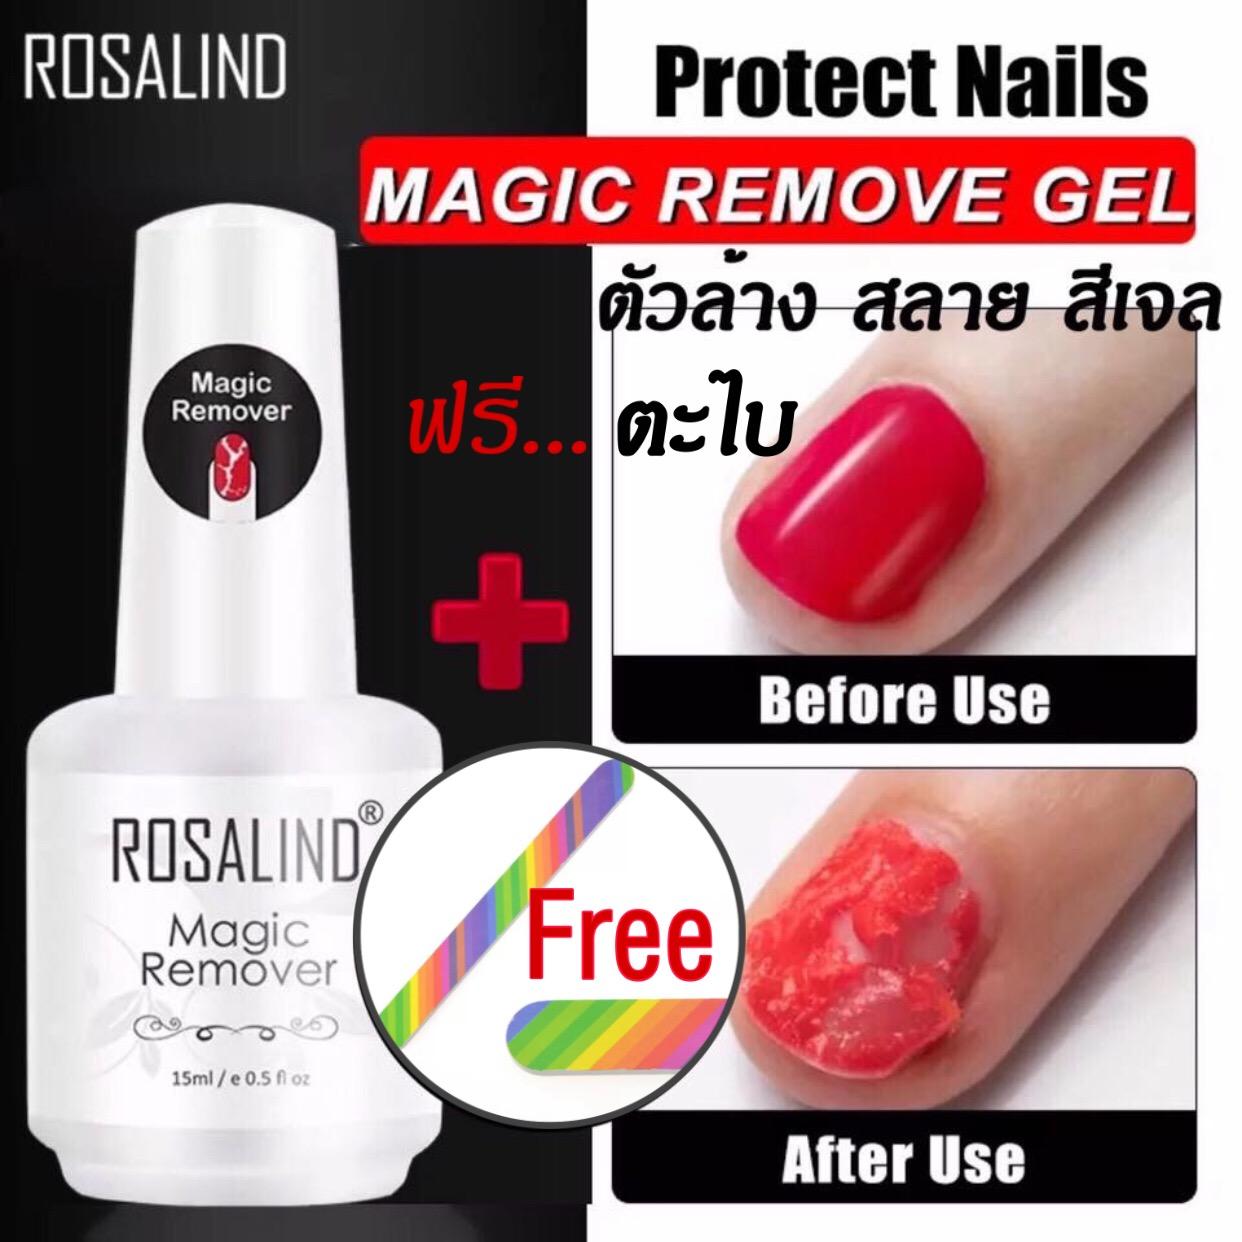 Rosalind Magic Remover Gel  ใหม่ น้ำยาสลาย ล้างสีเจลแบบเร็ว 3 นาที + ตะไบอย่างดี ไม่ต้องรอนาน สะดวก ง่าย ขนาด 15 ml.